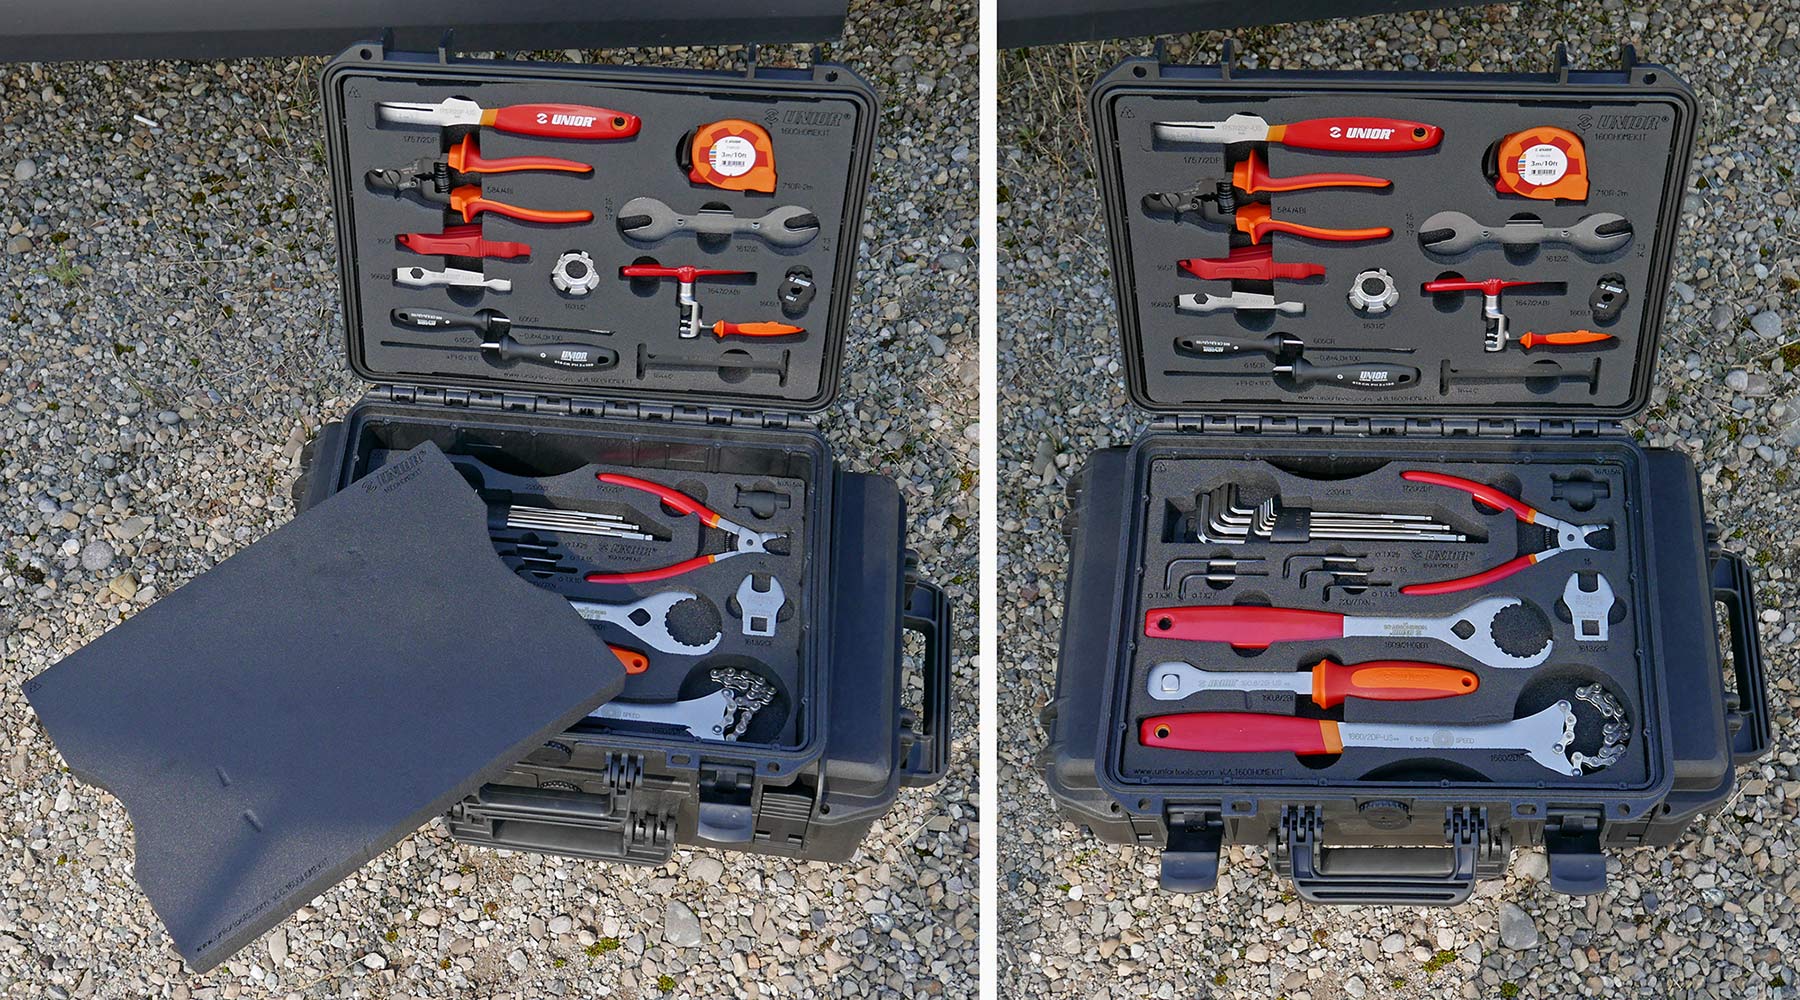 Unior Home Kit pro-level amateur bike mechanic travel toolbox made in Europe